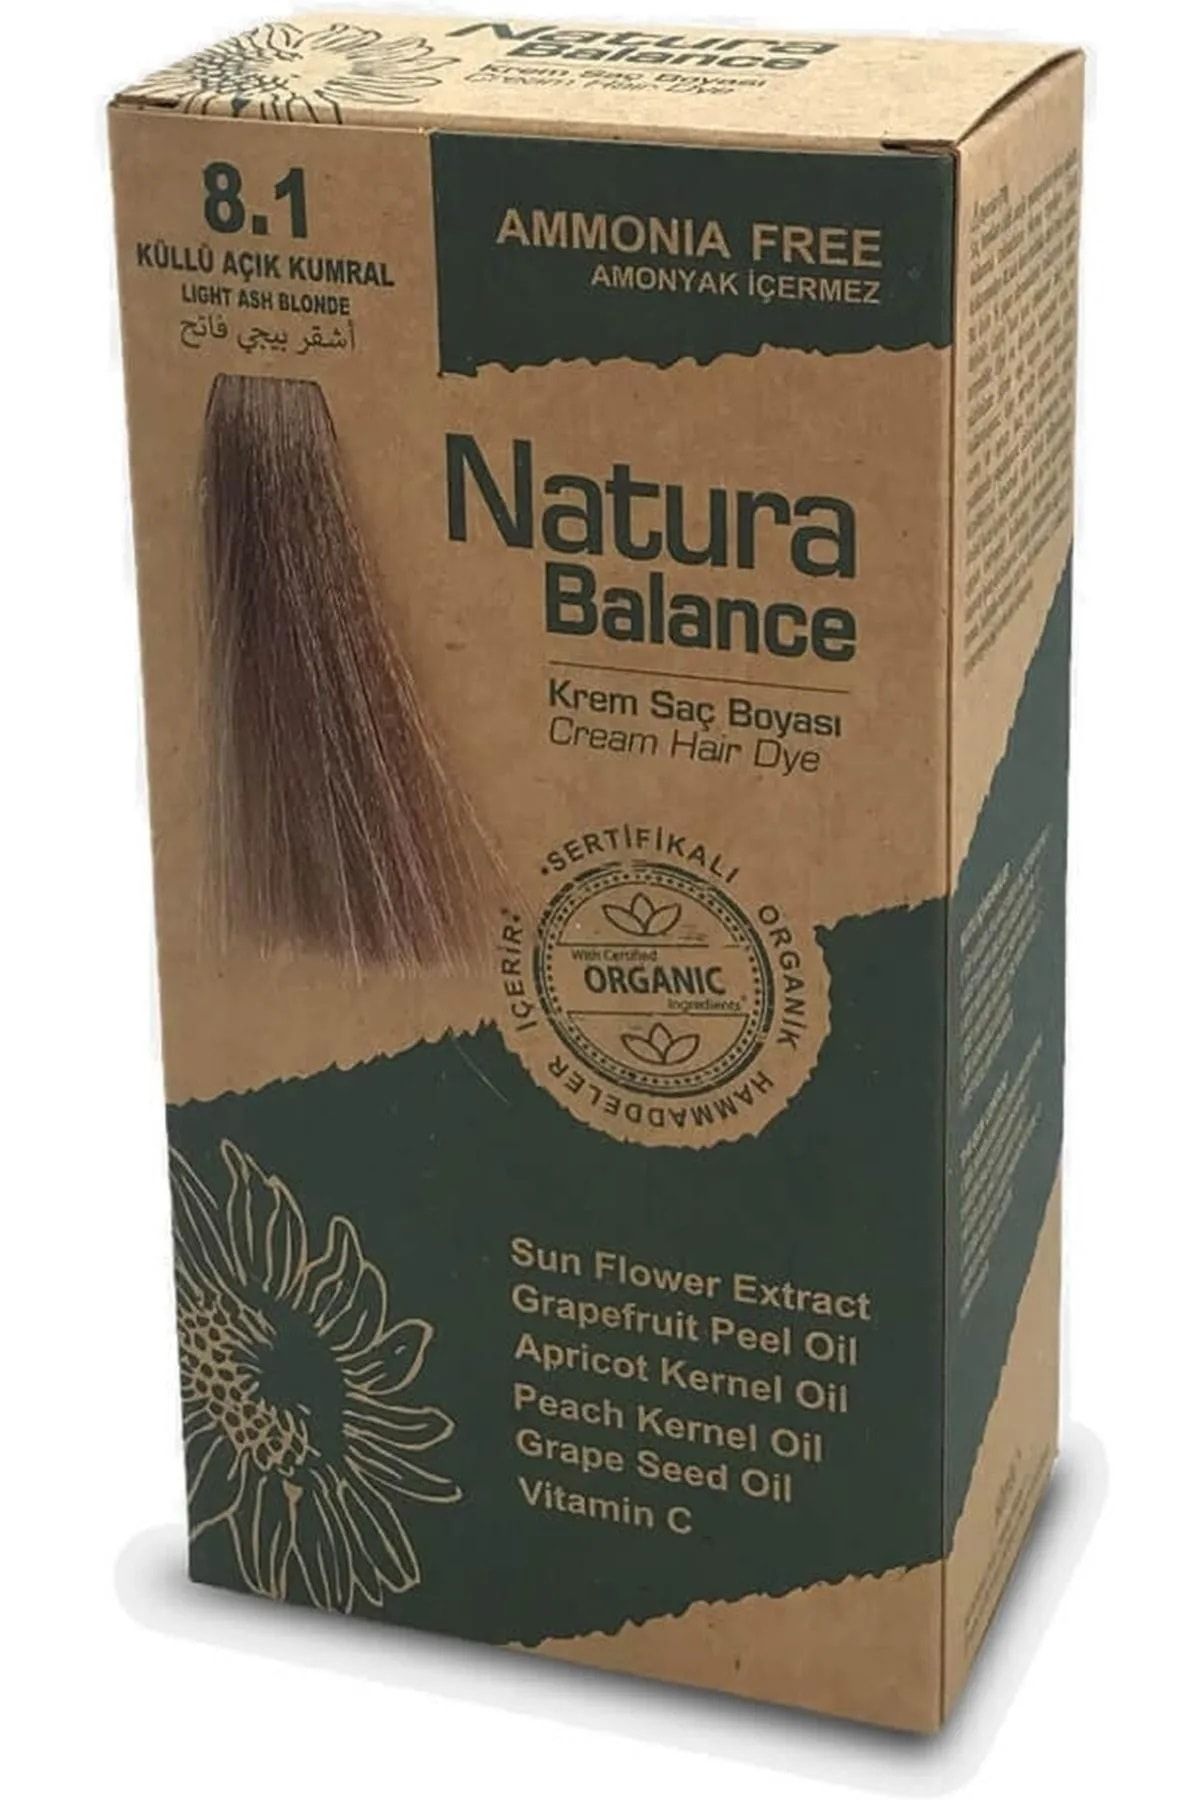 NATURABALANCE Natura Balance Saç Boyası 8.1 Küllü Açık Kumral